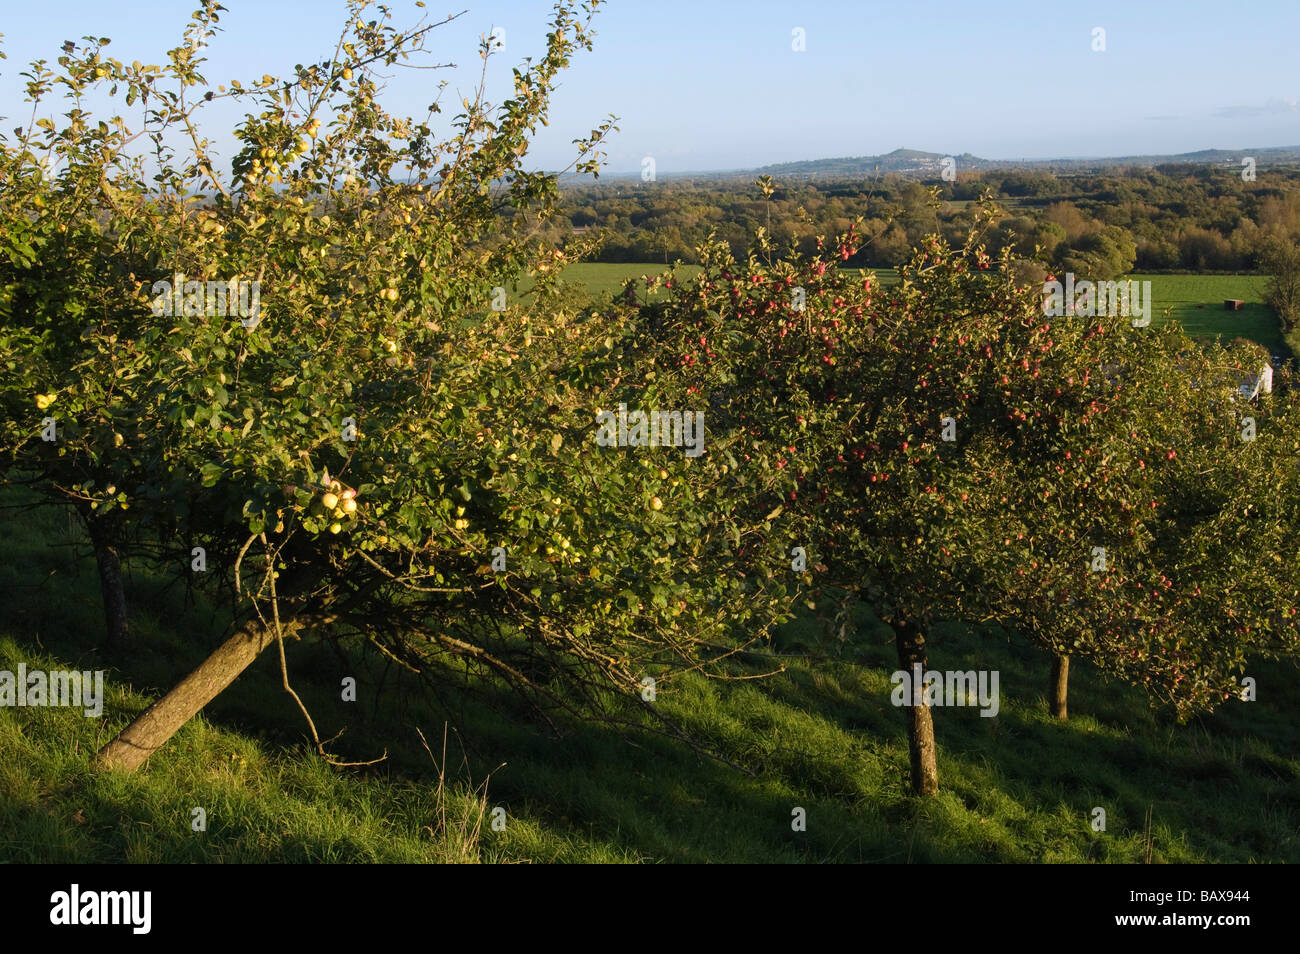 Cider apples ready for picking Wilkins Cider Orchard Landsend Farm Mudgley Wedmore Somerset England Stock Photo